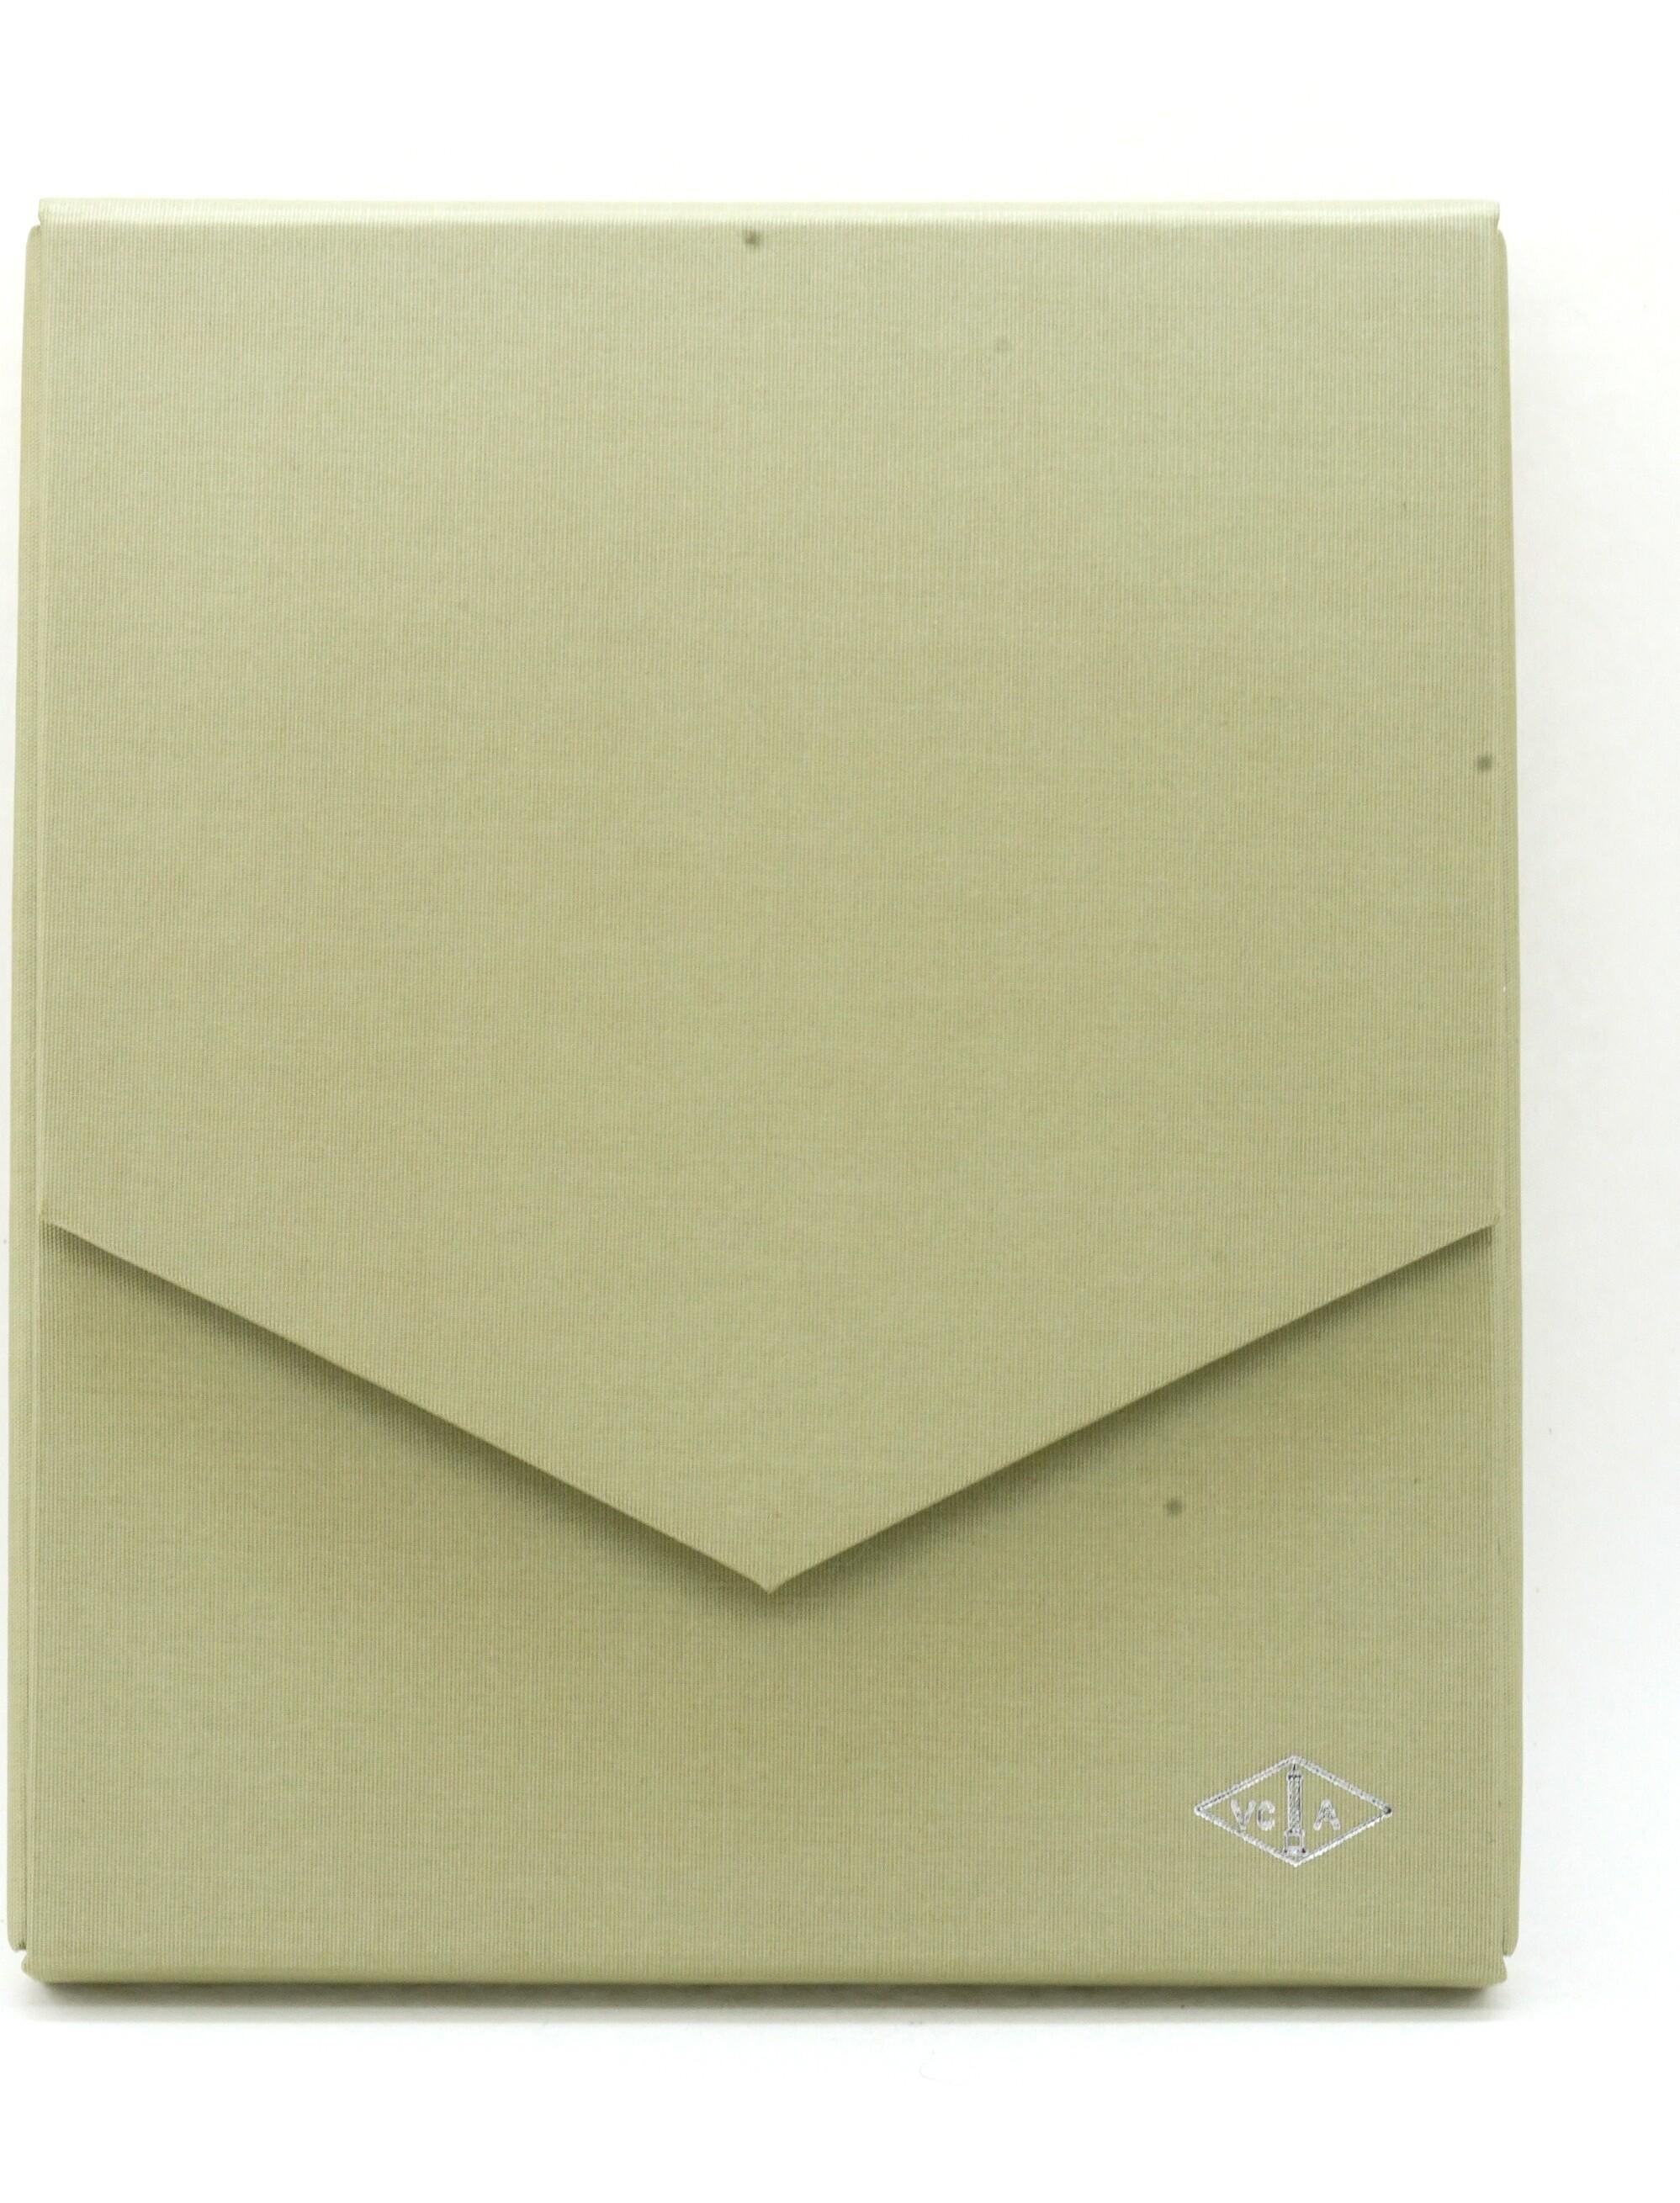 Van Cleef & Arpels Alhambra 18K Elegant Tigers Eye 10-Charm Necklace w/ Box For Sale 1